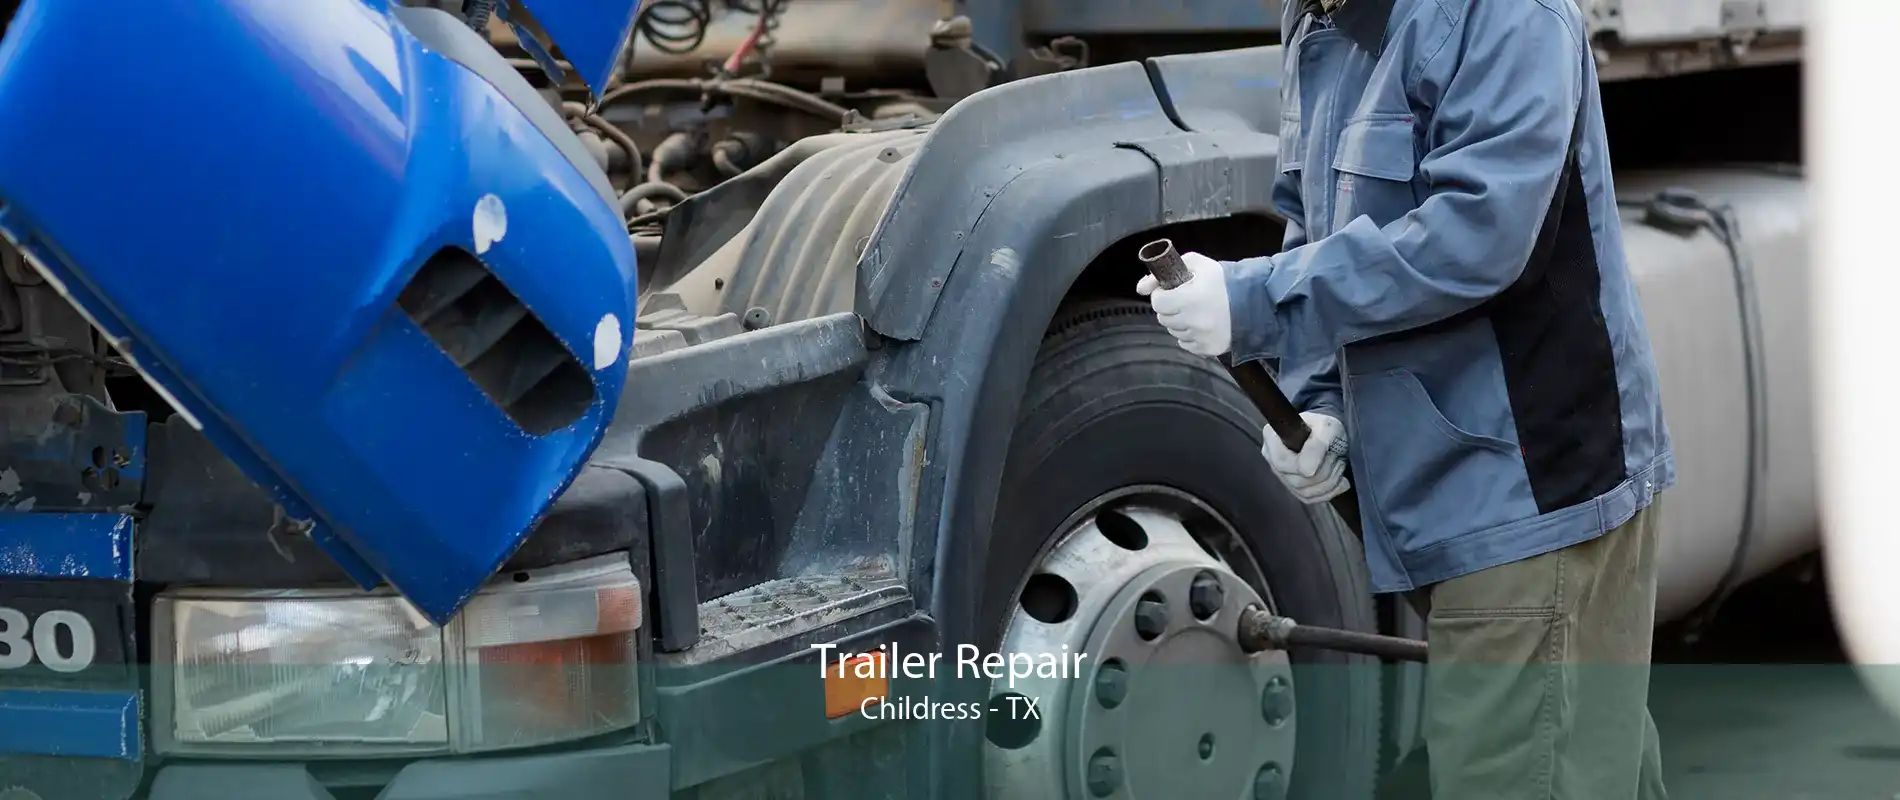 Trailer Repair Childress - TX